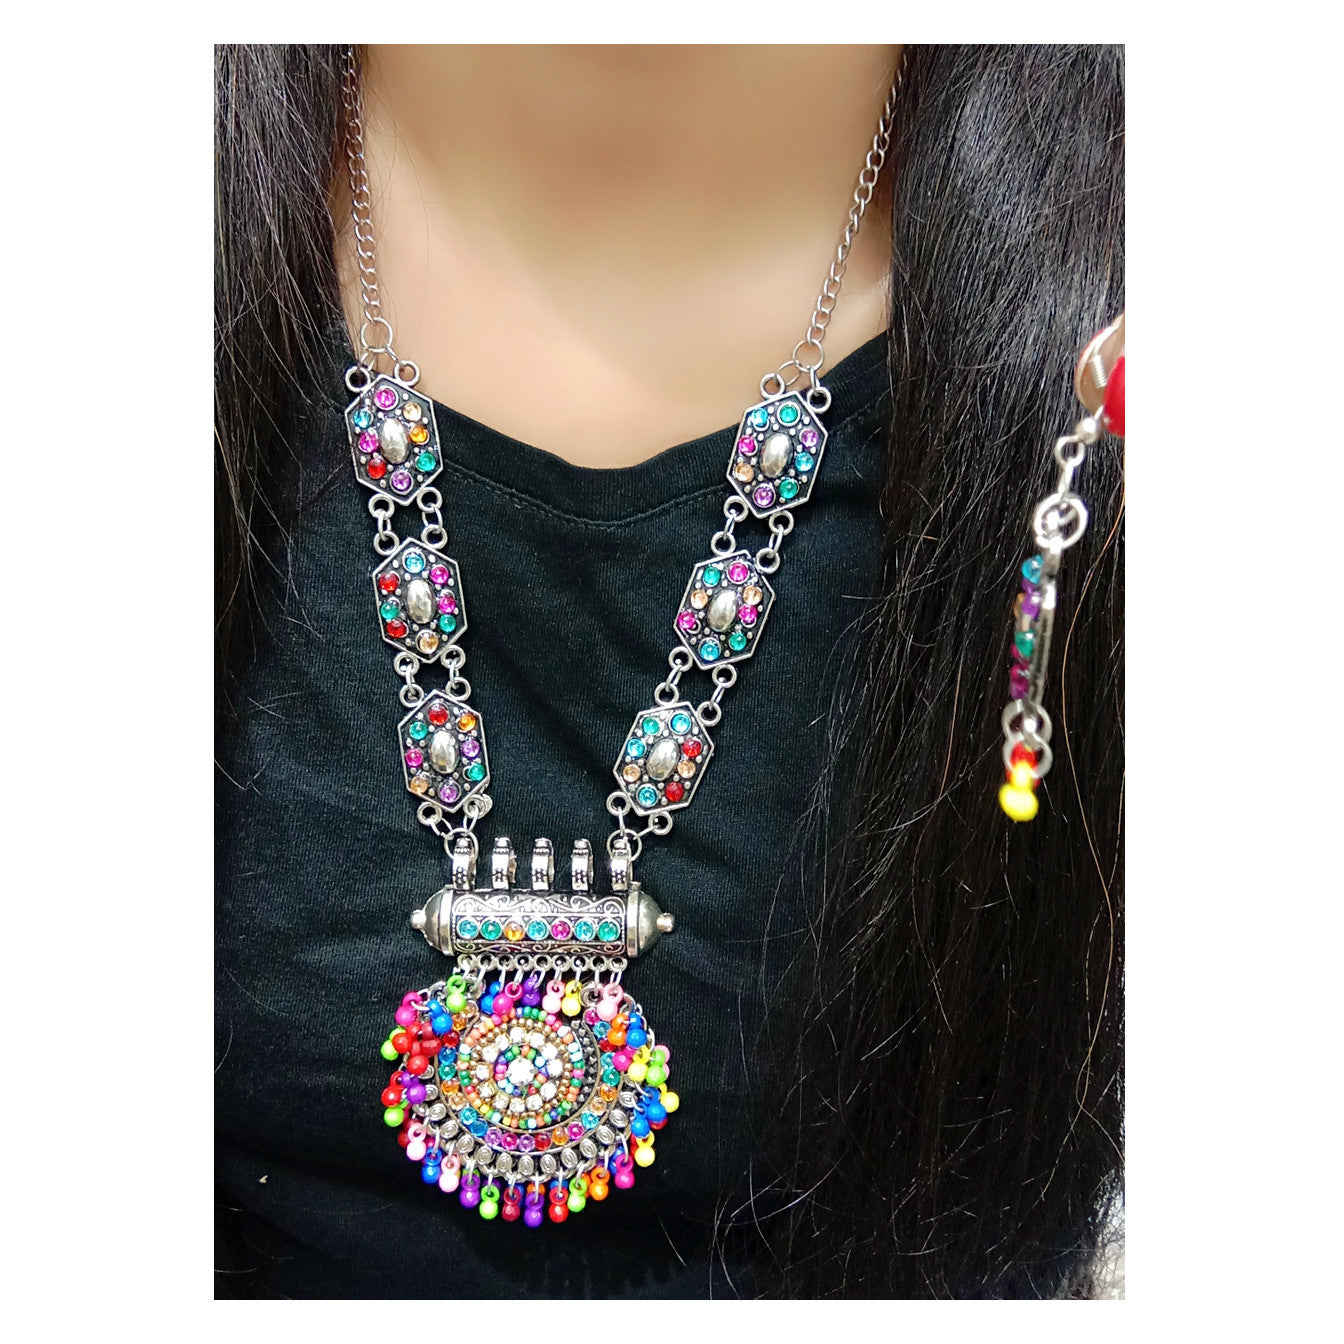 Mekkna Designed Multicolor Necklace with Earrings for Women | Buy This Jewellery Online from Mekkna